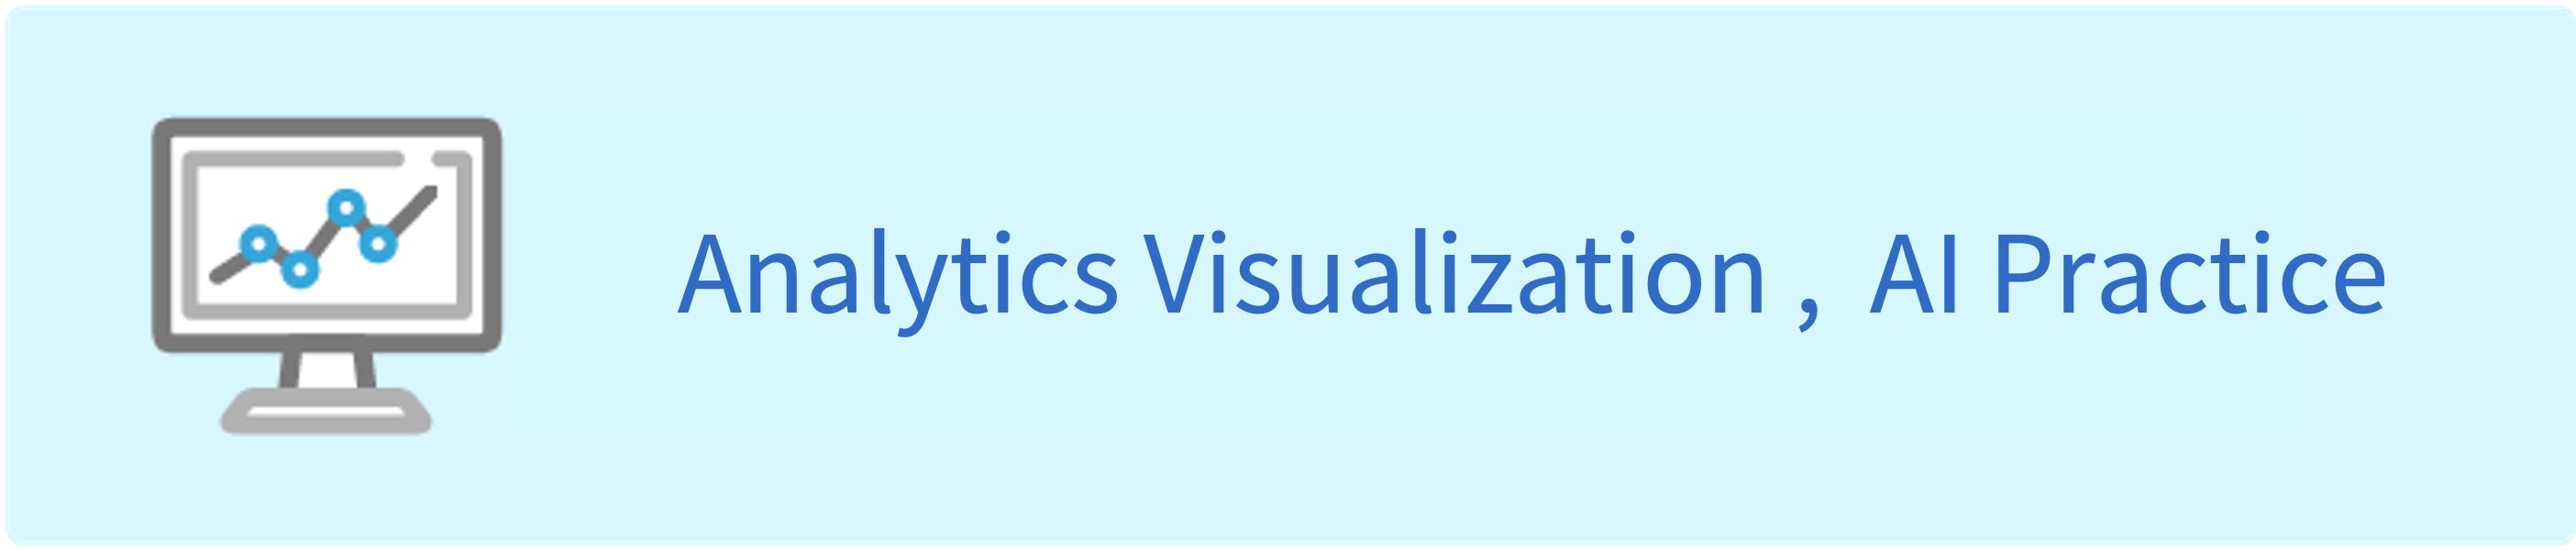 Public Data Analysis Visualization AI Practice Guide